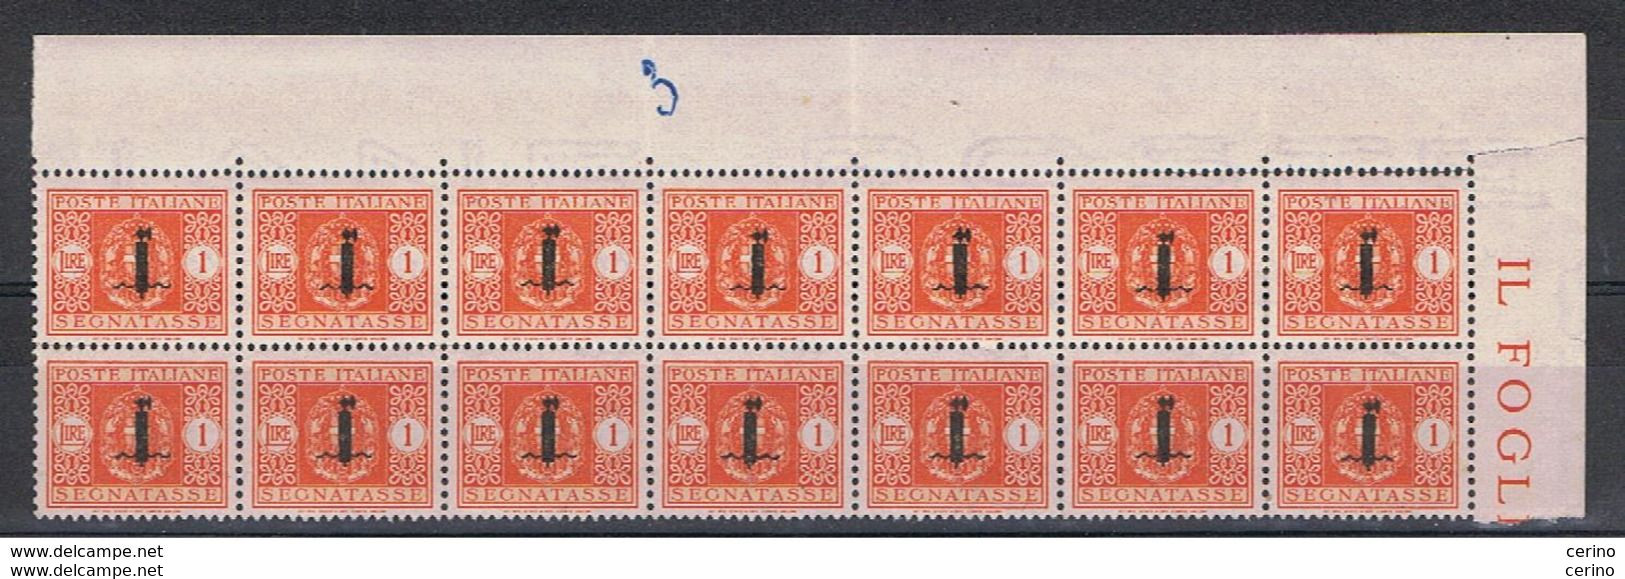 R.S.I.:  1944  TASSE  - £. 1  ARANCIO  BL. 14  N. -  DENTELLATURA  APERTA  IN  ALTO  A  DX. -   SASS. 68 - Portomarken